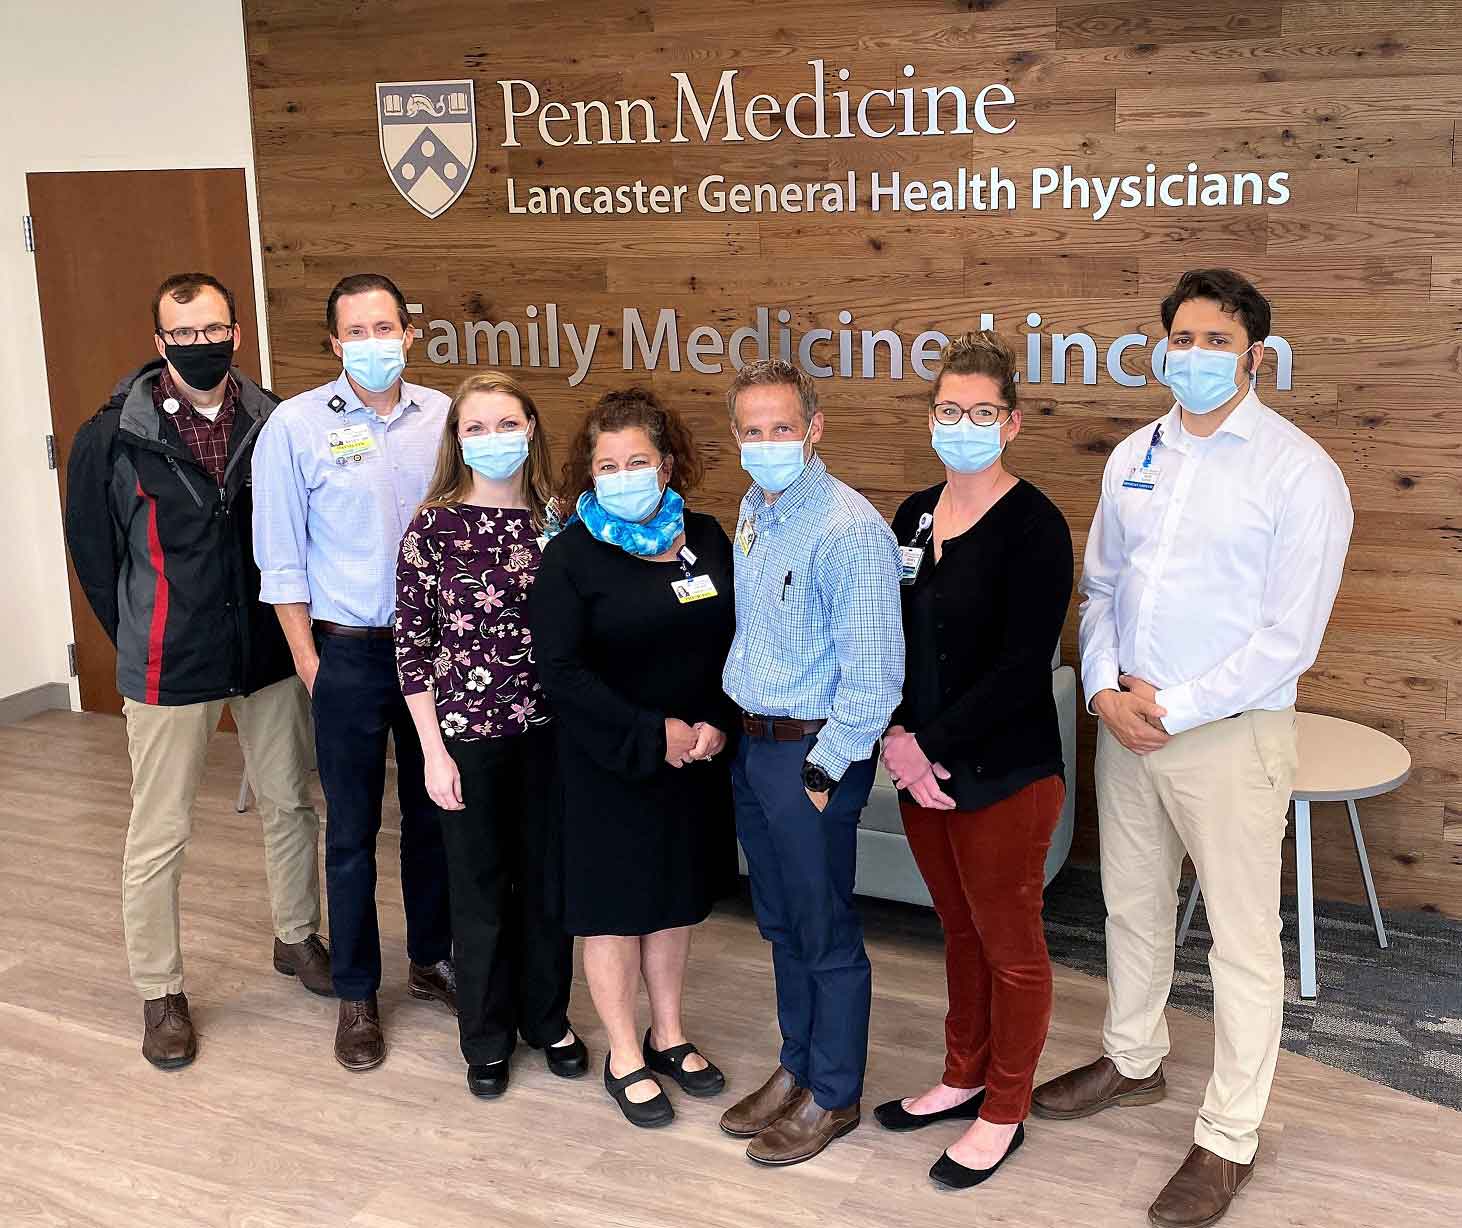 Penn Medicine Lancaster General Health